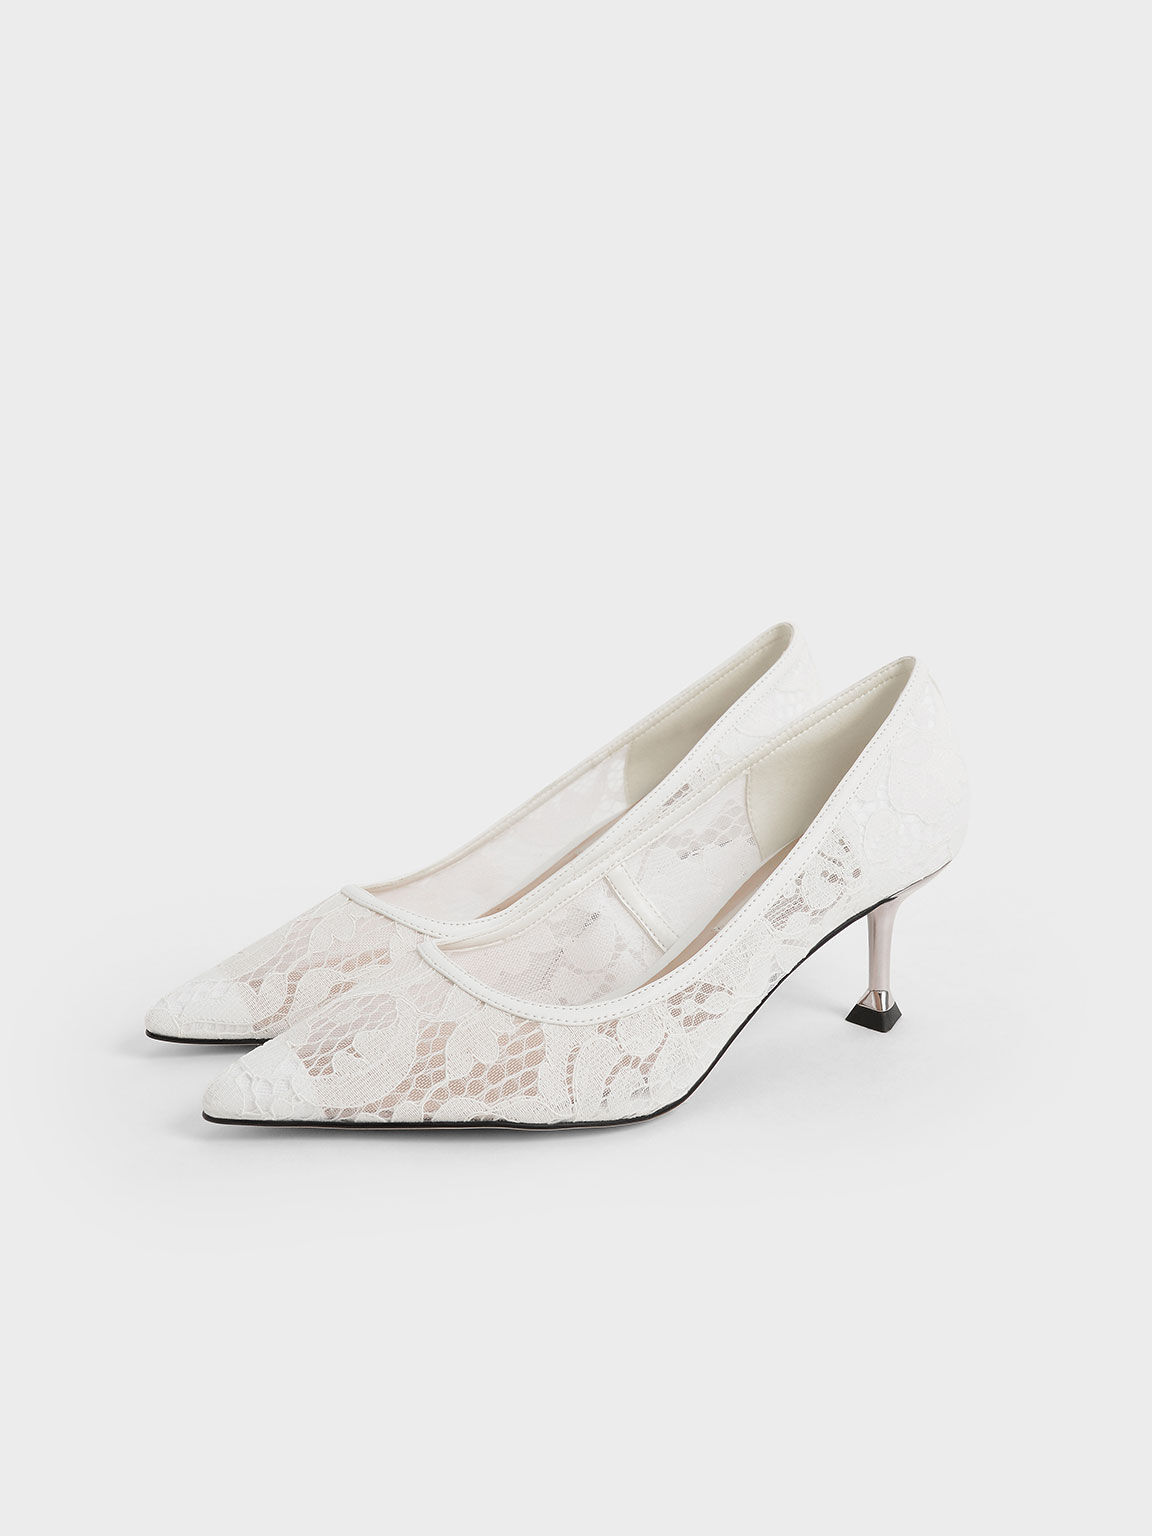 Buy Melesh White Princess Lace Sweet Wedding Bridal Women High Heels 10cm  (8.5 B(M) US - EU40) at Amazon.in